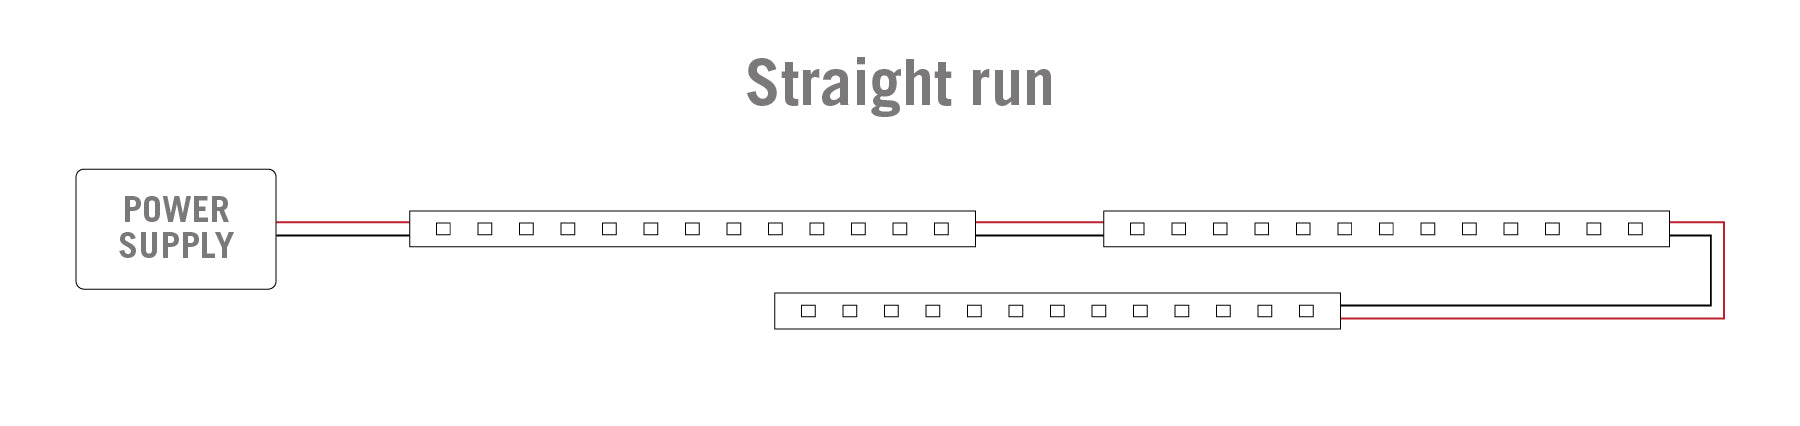 Straight run configuration